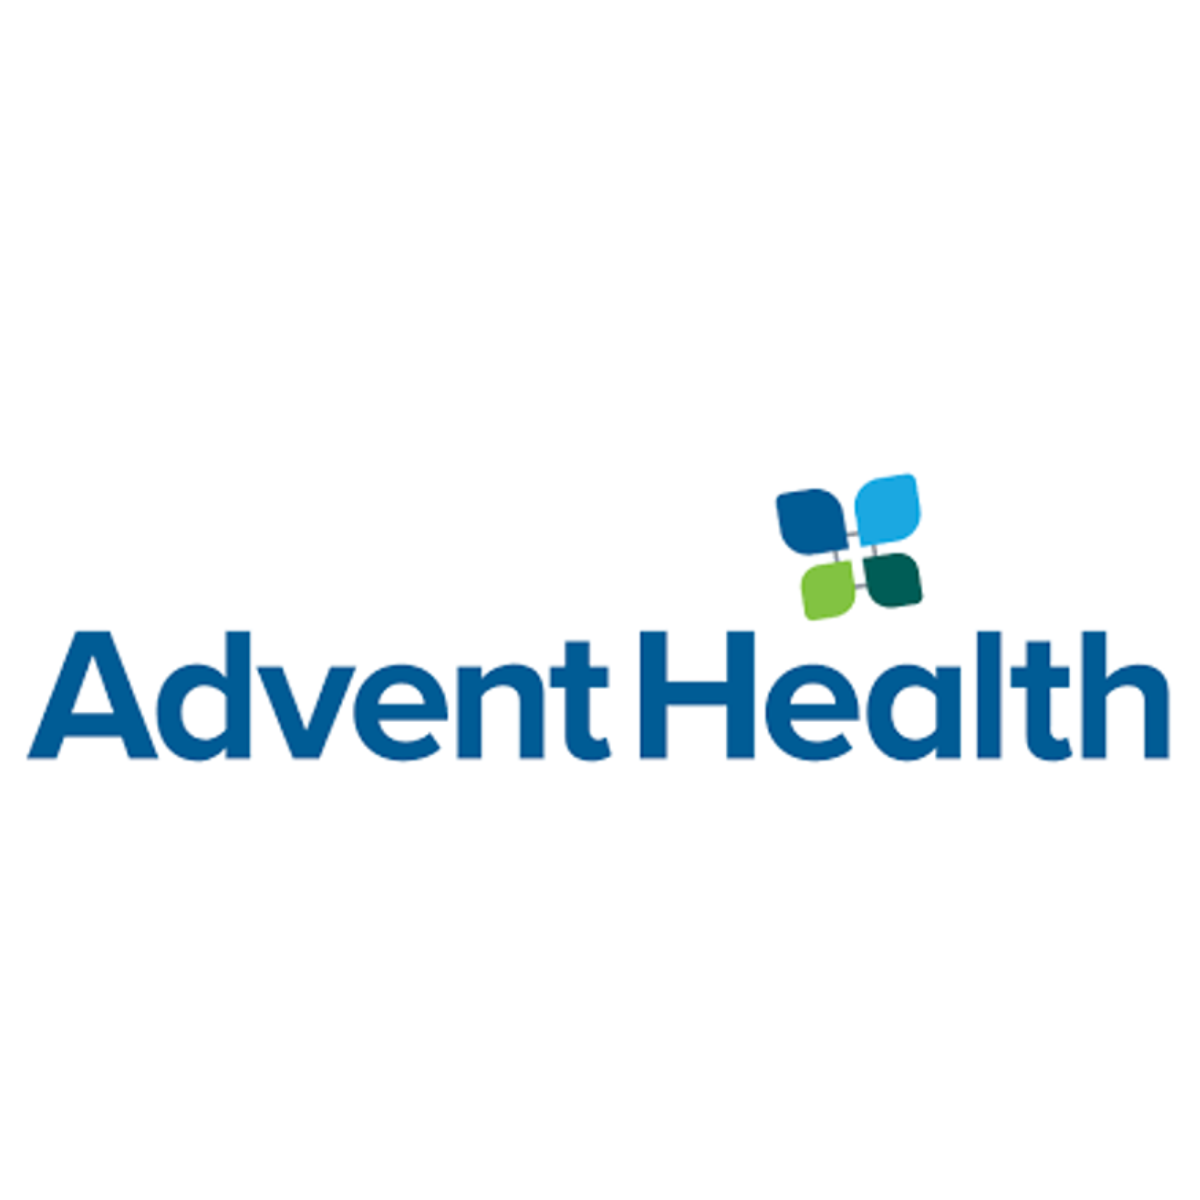 AdventHealth logo in blue